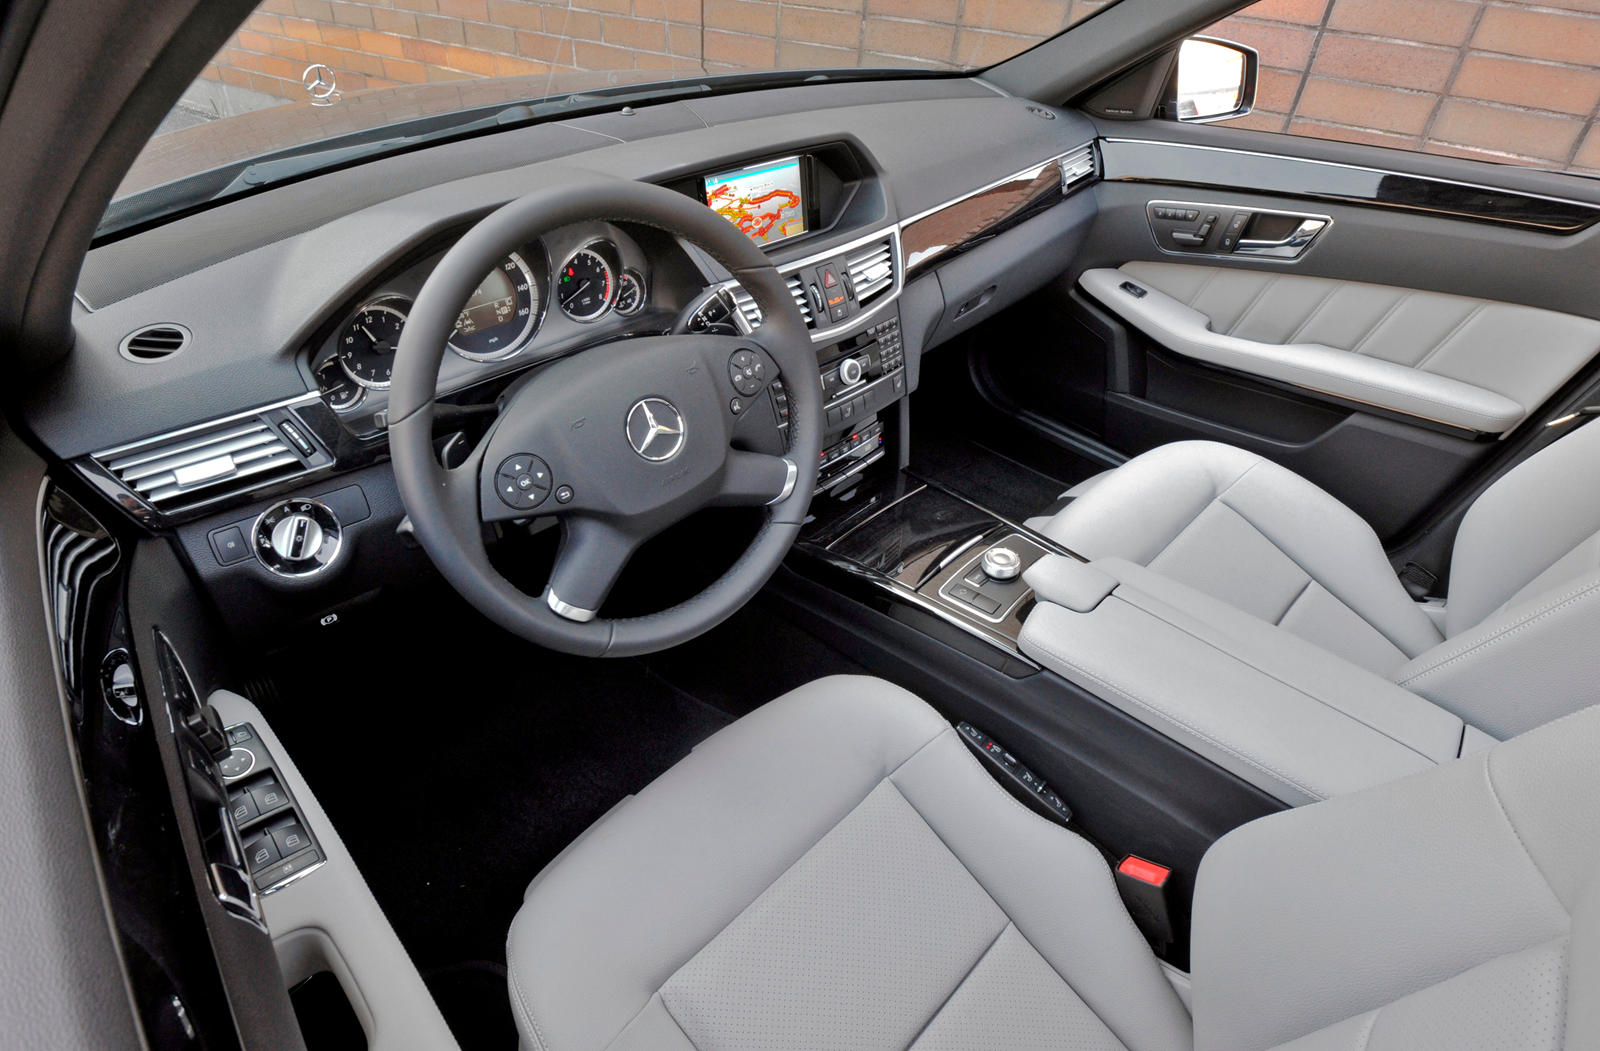 2012 Mercedes-Benz E-Class Wagon Dashboard